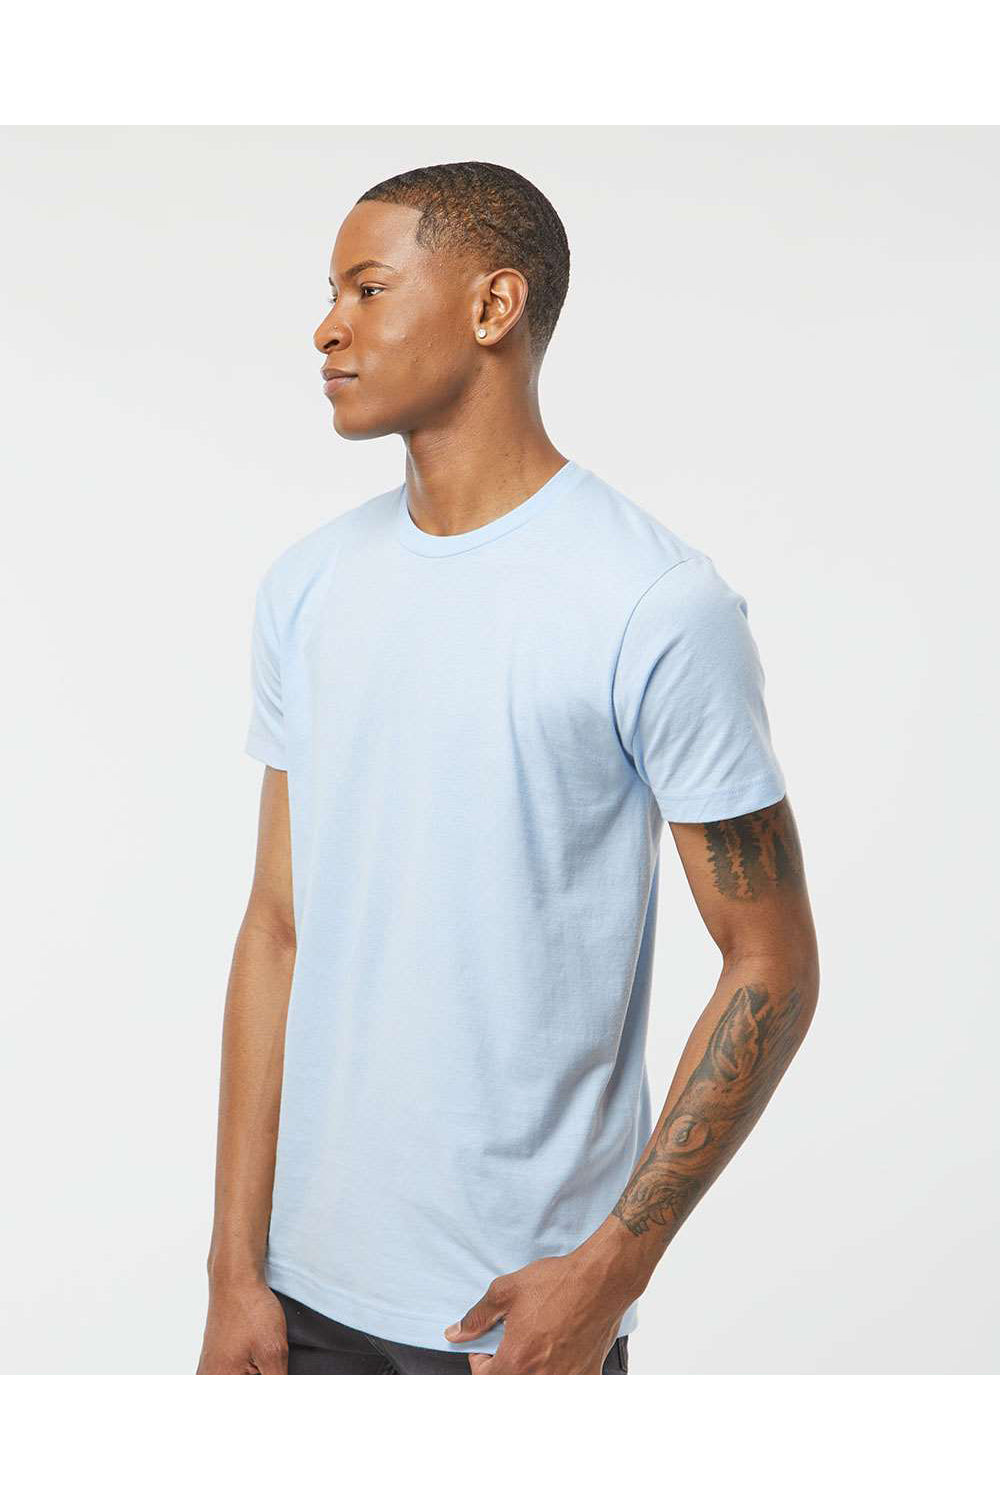 Tultex 202 Mens Fine Jersey Short Sleeve Crewneck T-Shirt Baby Blue Model Side